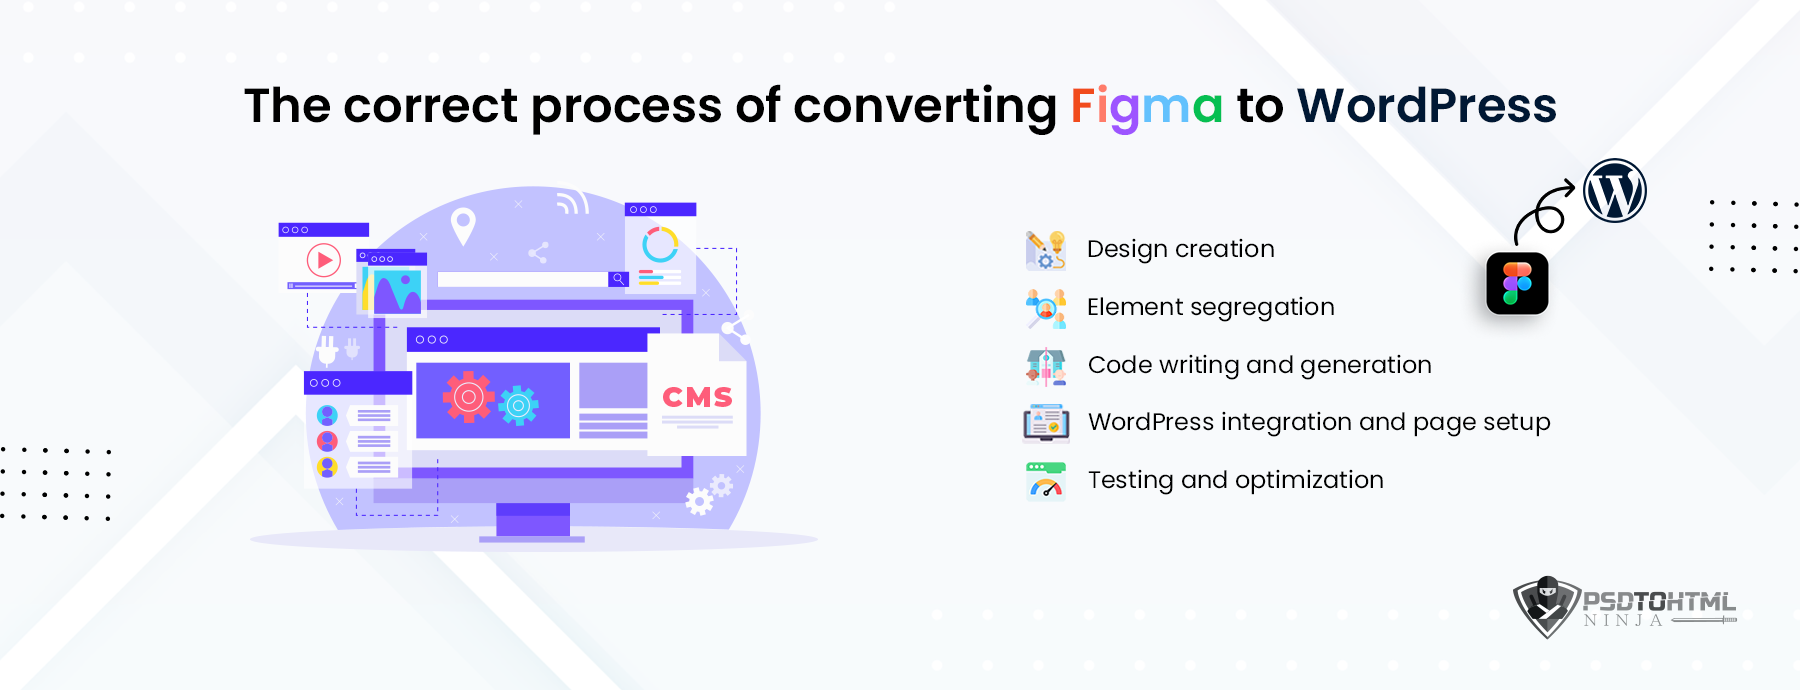 The correct process of converting Figma to WordPress